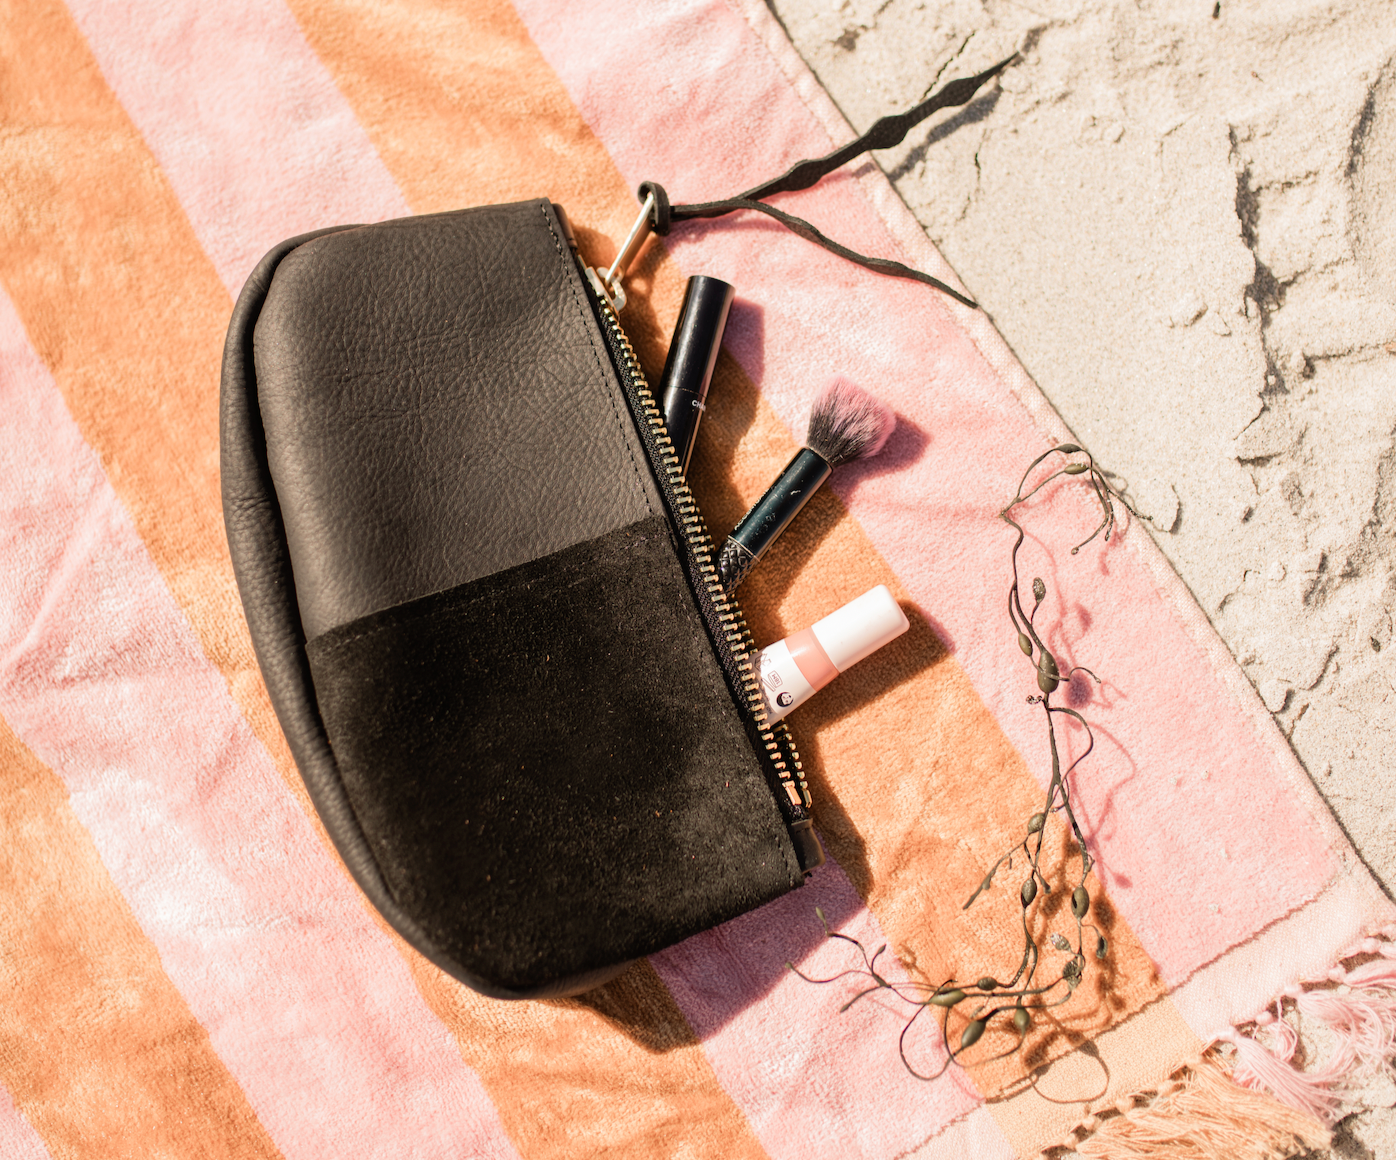 black leather makeup bag on beach blanket